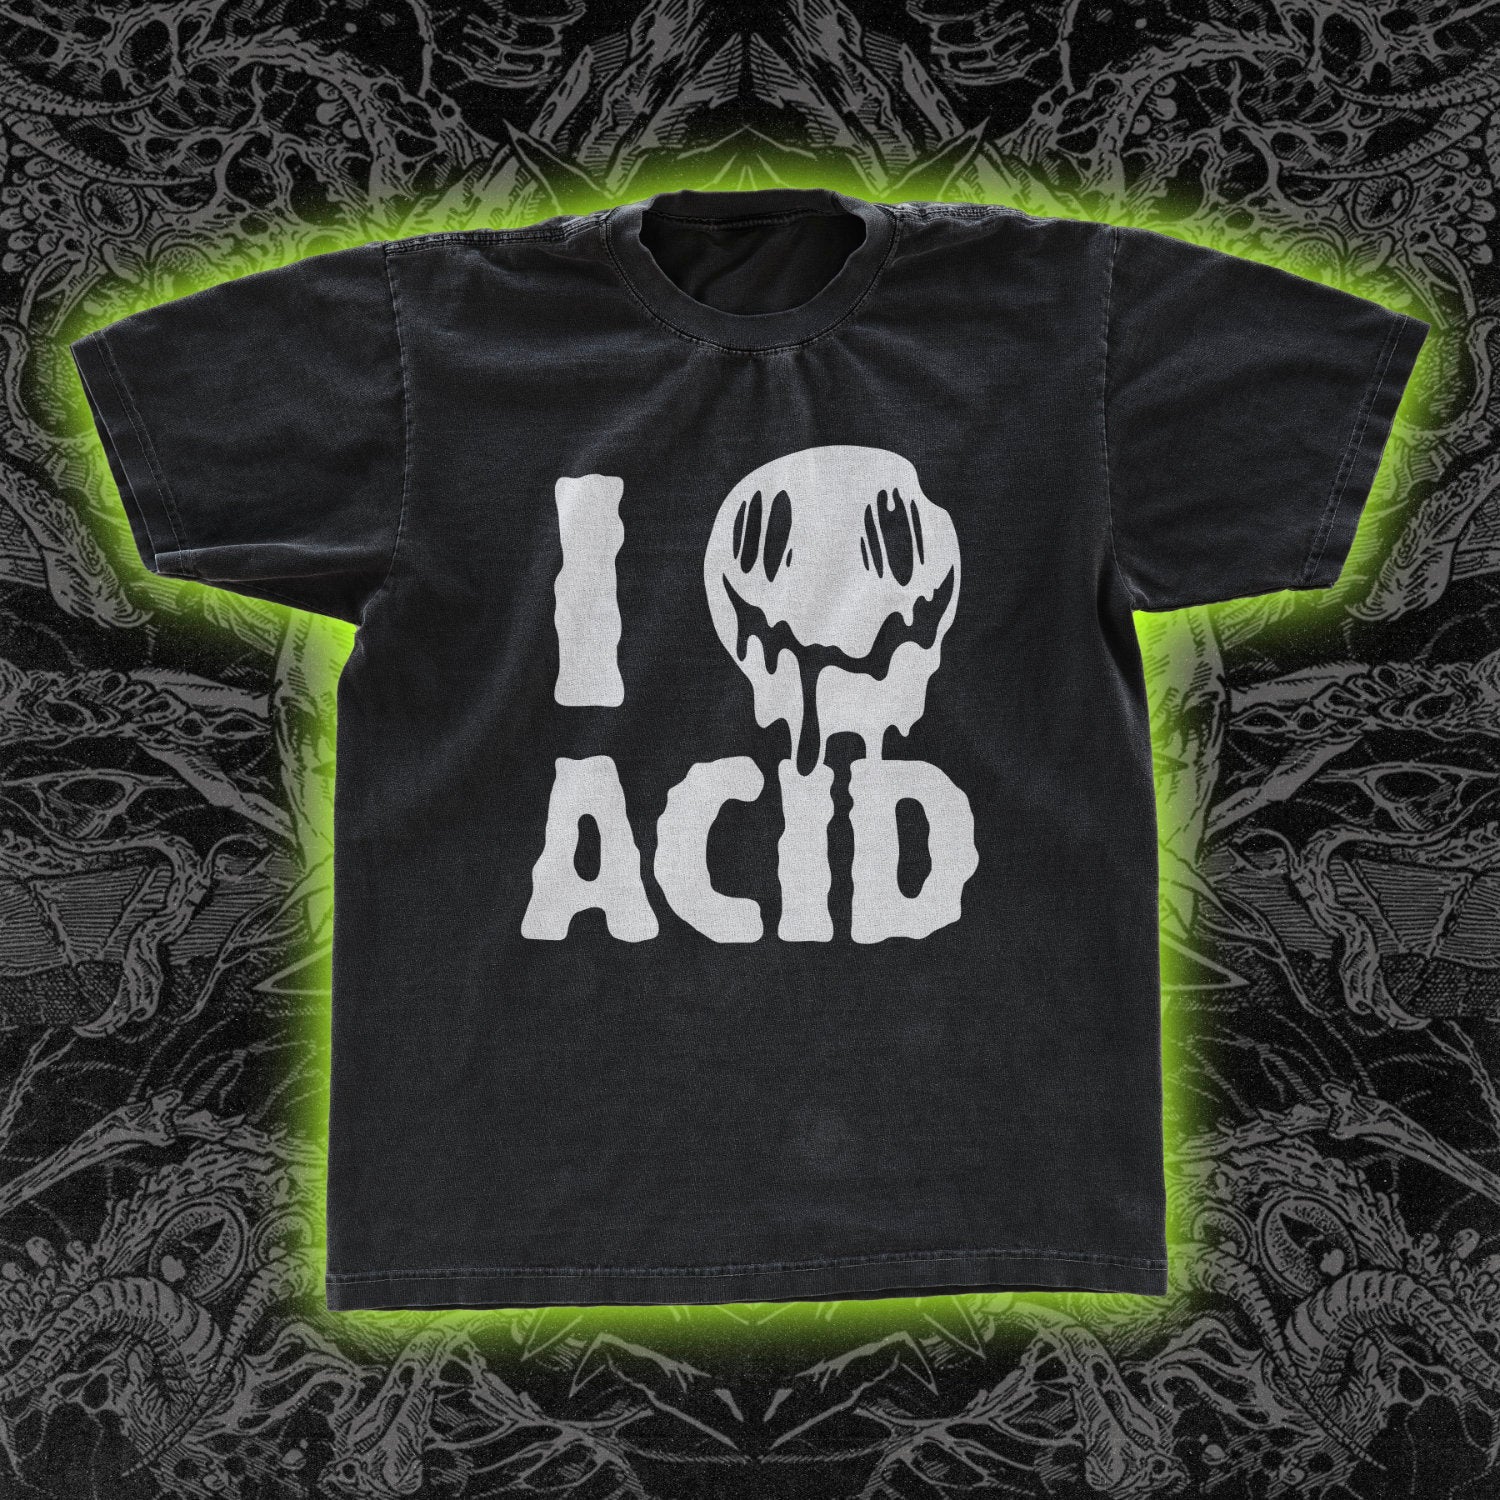 I Love Acid Classic Tee